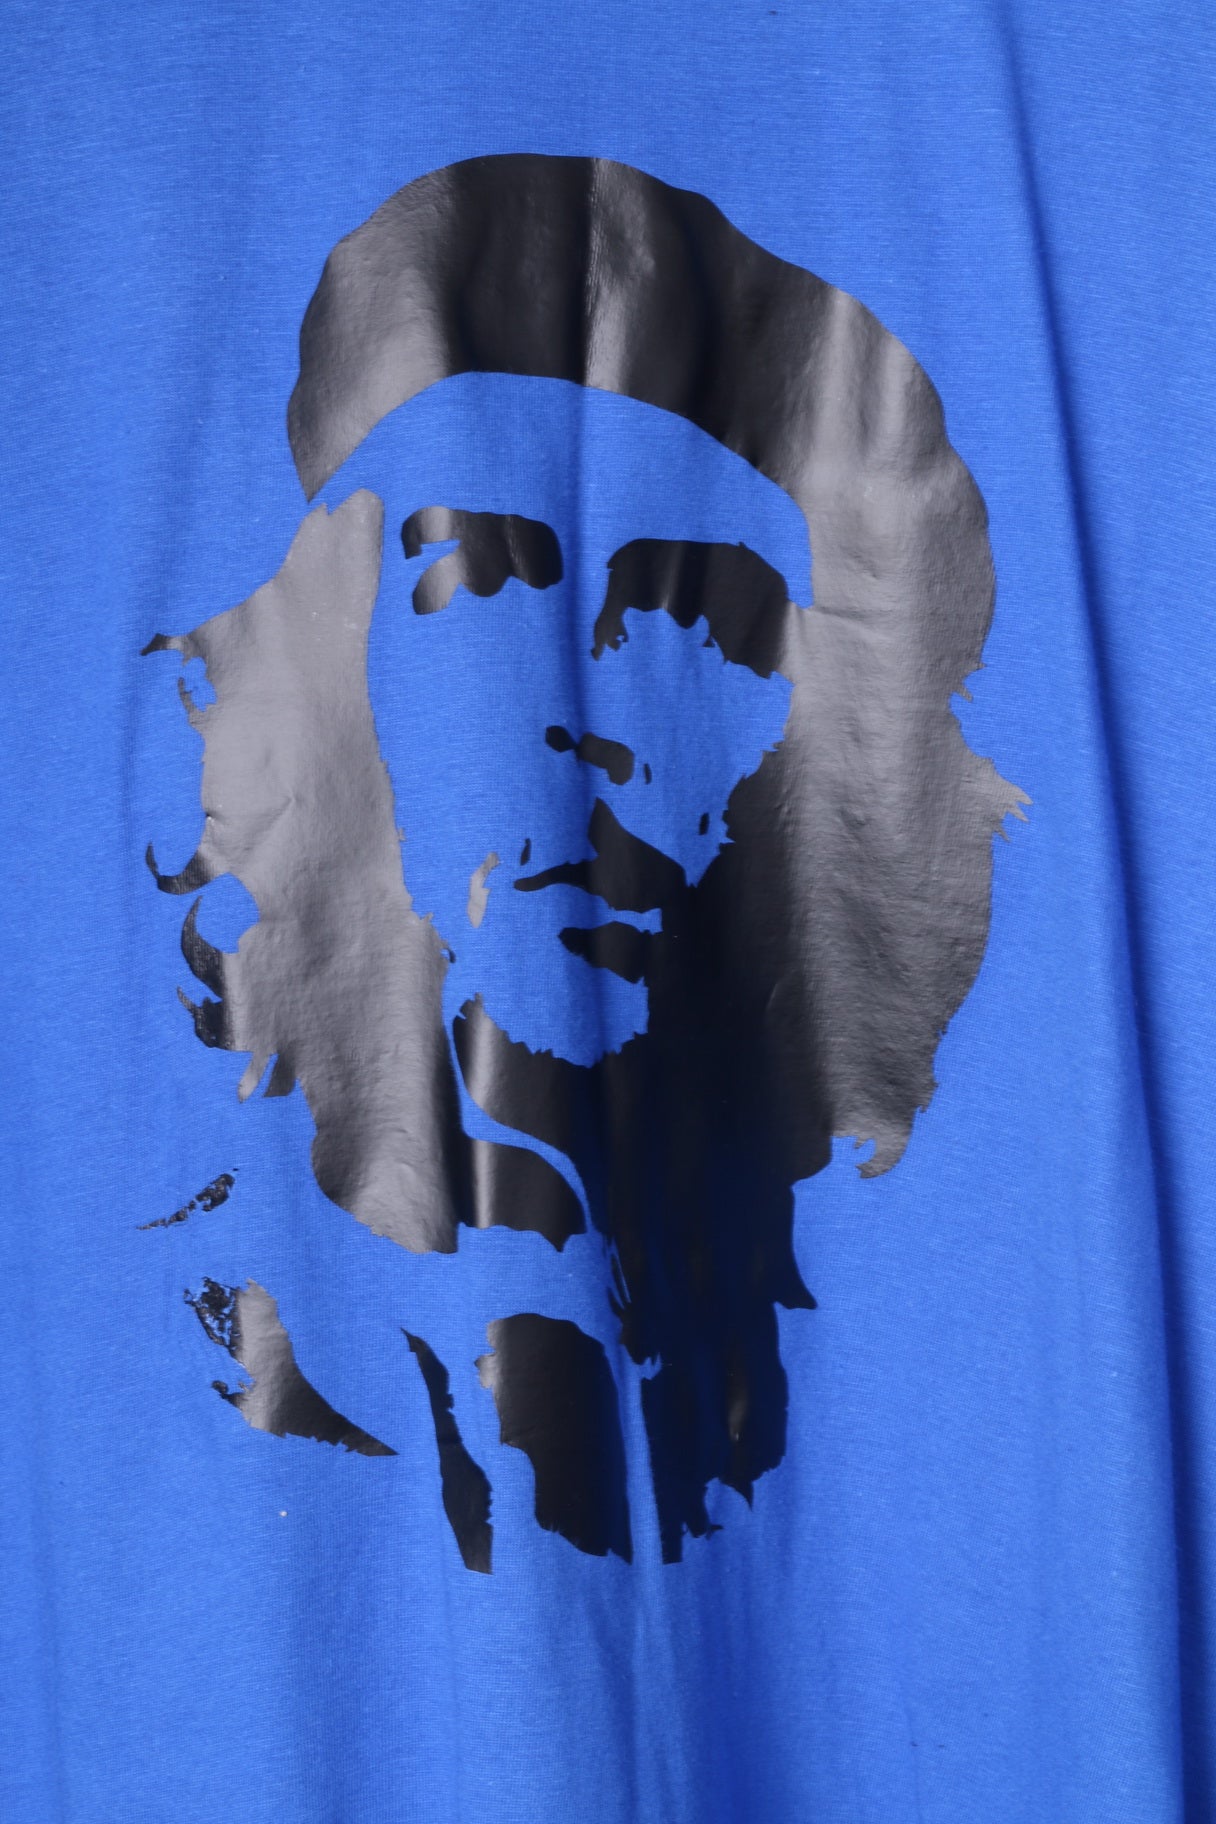 T-shirt Gildan da uomo XL Top girocollo con grafica classica in cotone blu